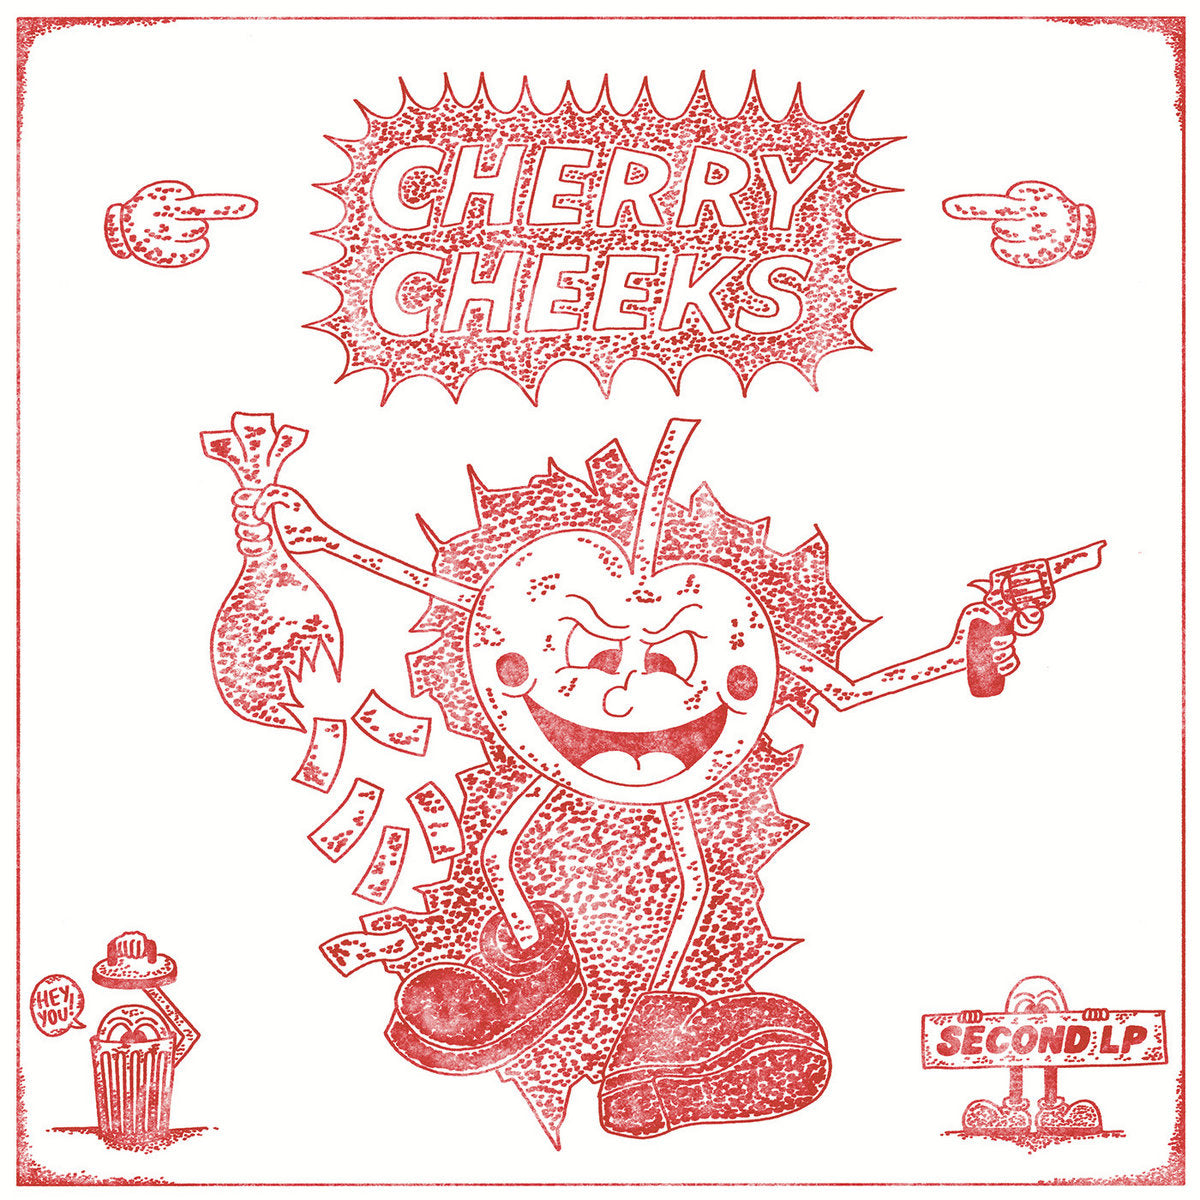 CHERRY CHEEKS - SECOND LP Vinyl LP